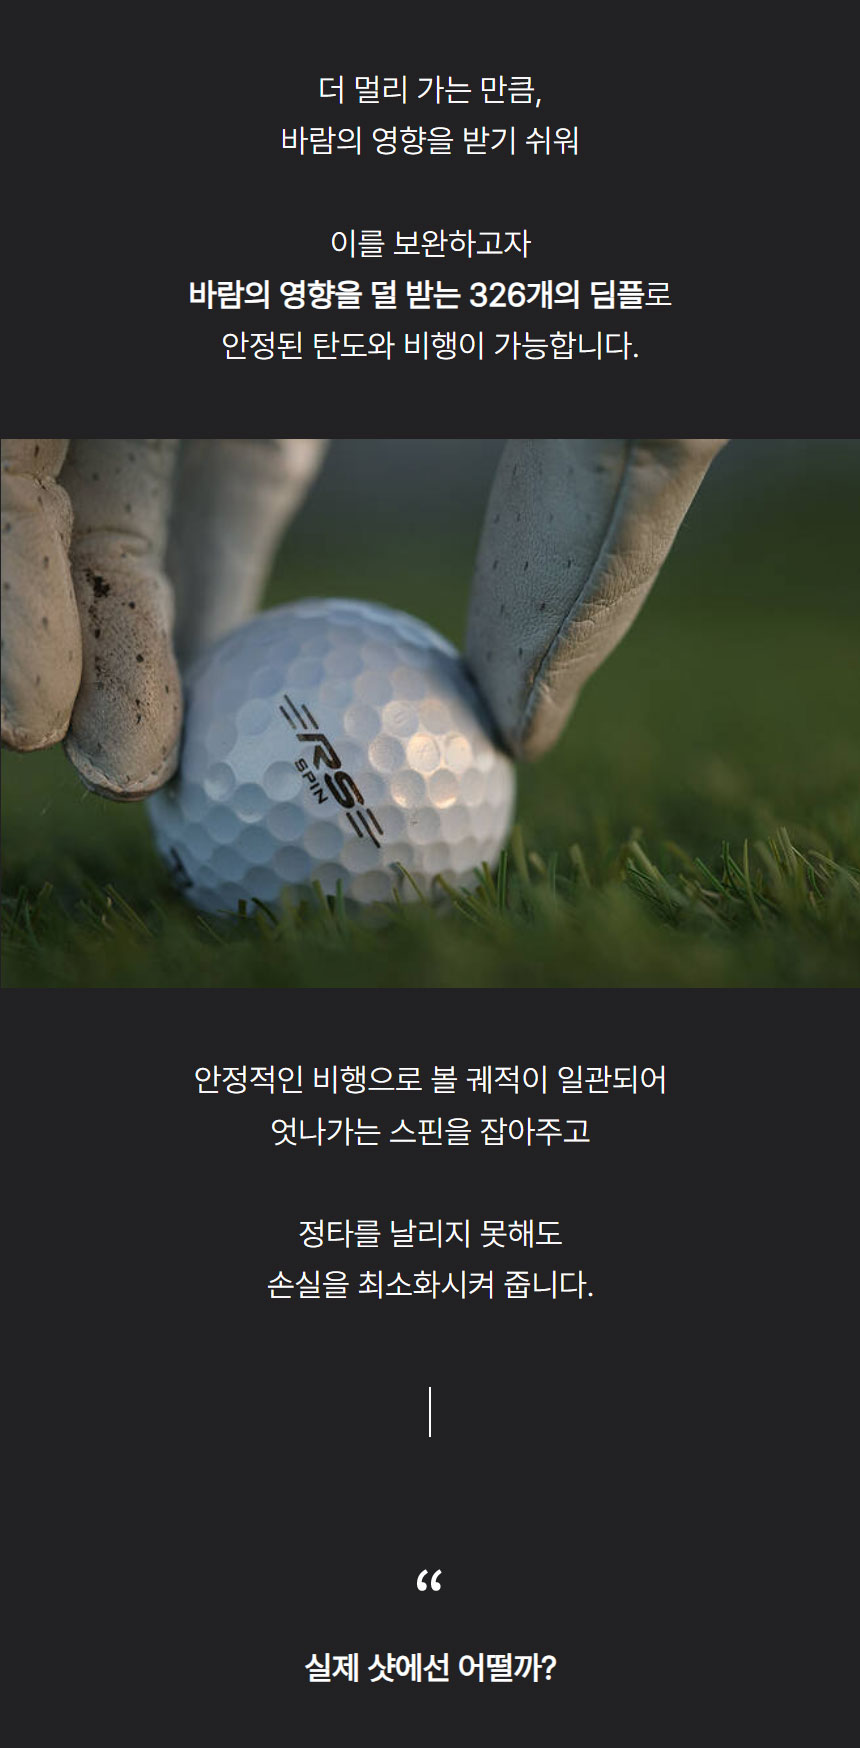 prgr_rs_spin_golf_ball_23_11.jpg